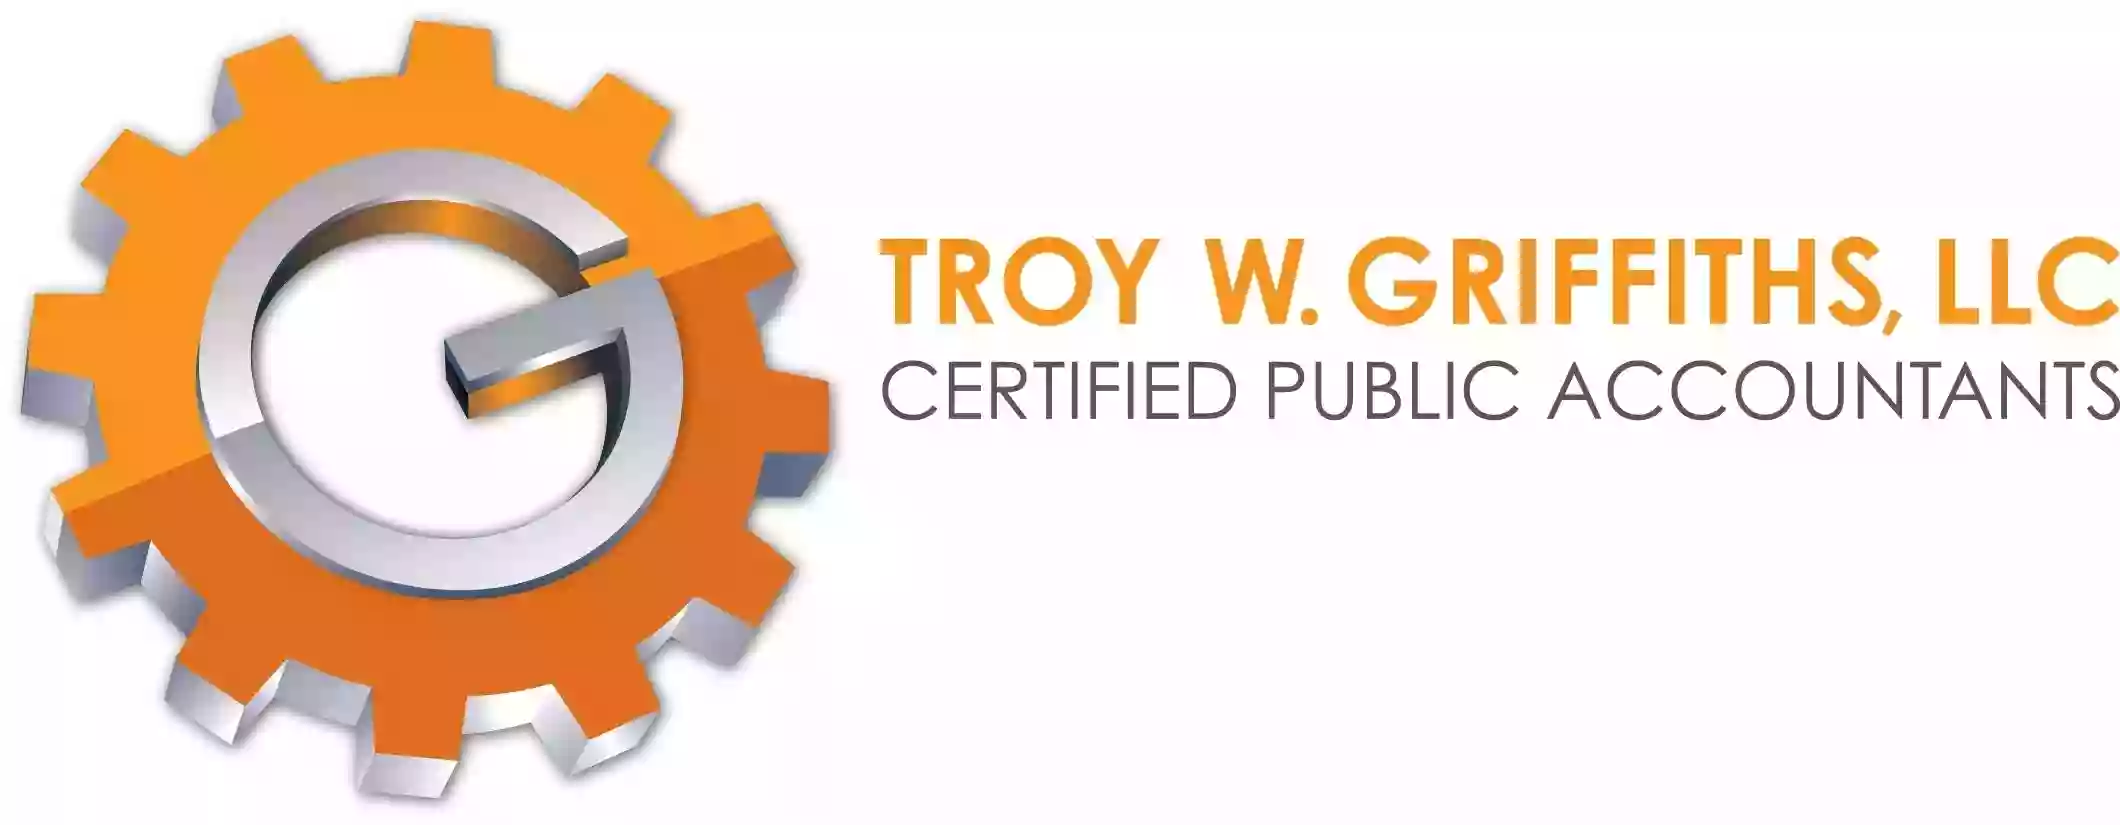 Troy W. Griffiths, LLC Certified Public Accountants